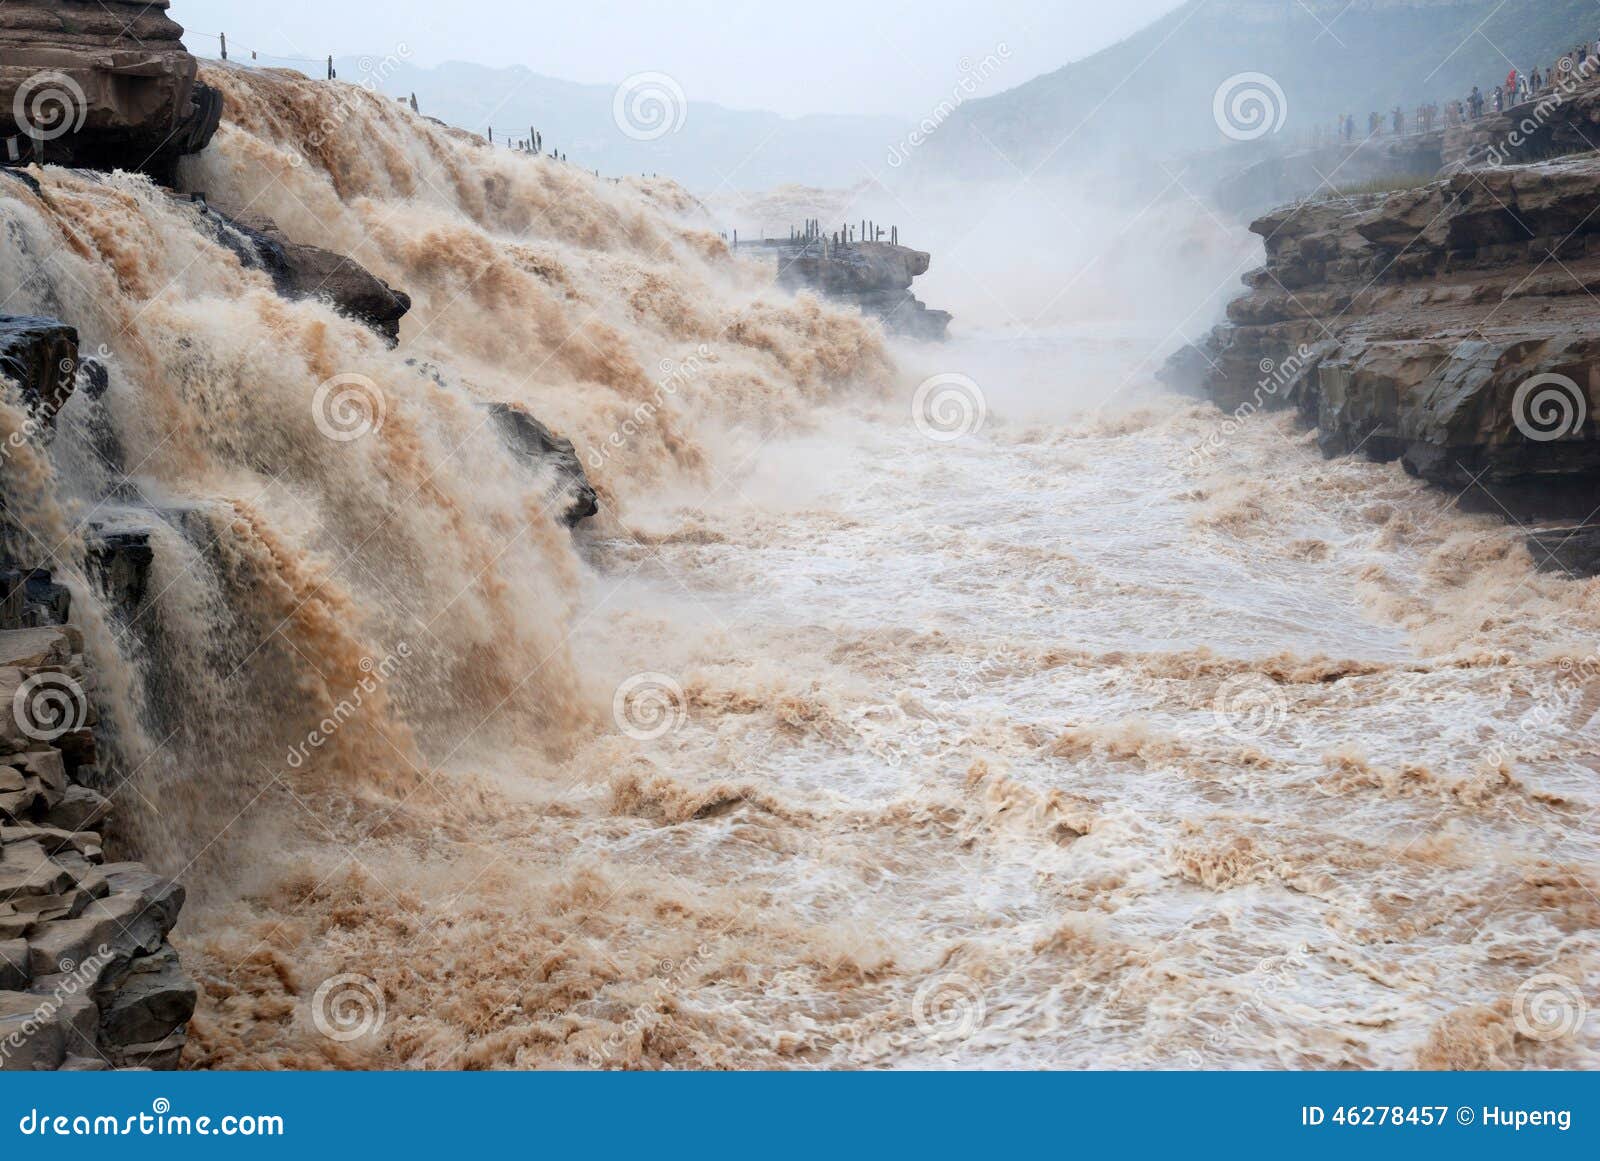 hukou waterfall of china's yellow river